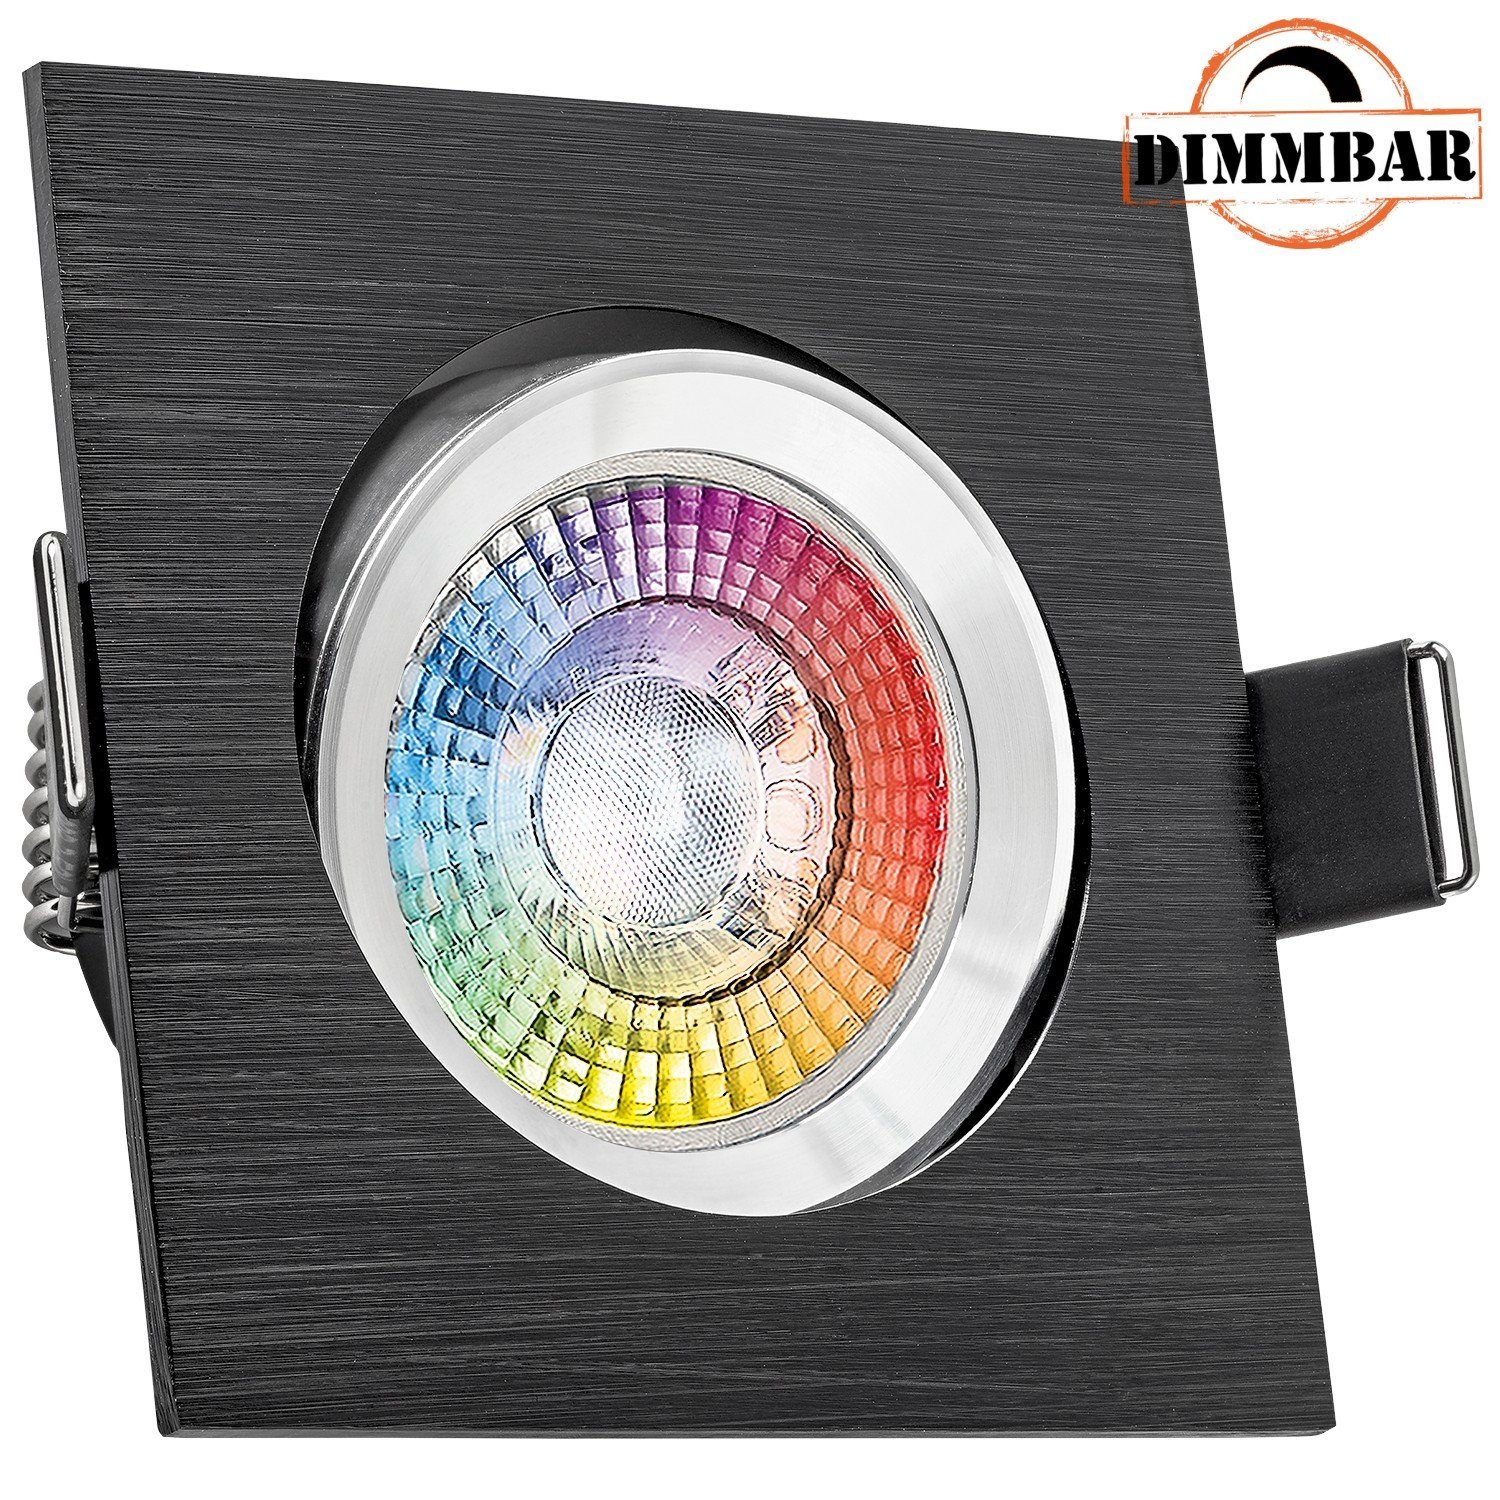 LEDANDO flach - 3W in LED Set zweifarbig Einbaustrahler Einbaustrahler extra RGB bicolor LED mit